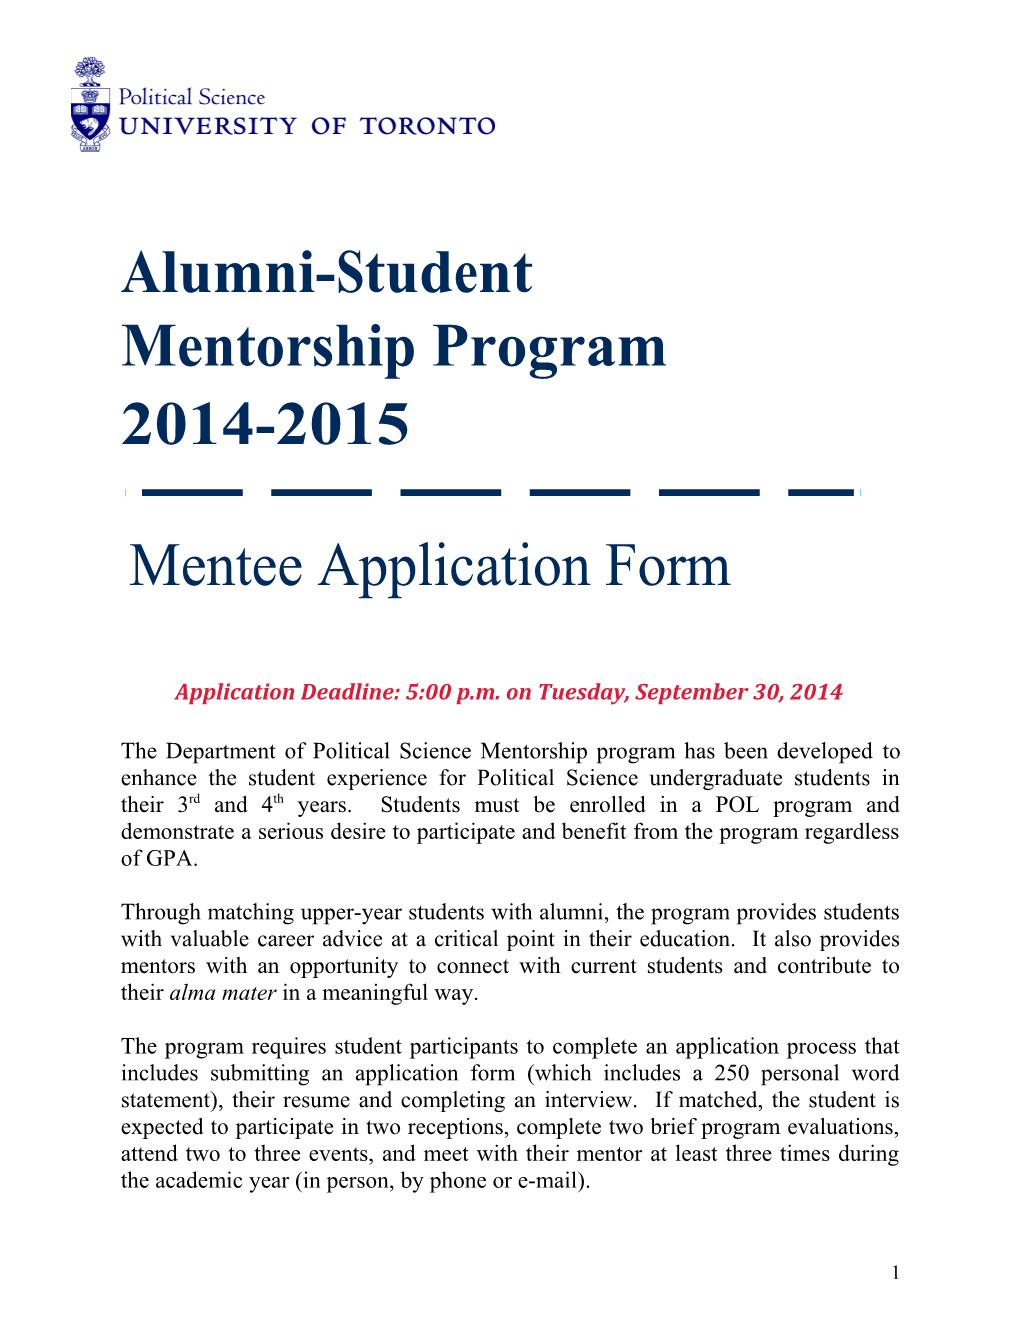 Alumni-Student Mentorship Program2014-15